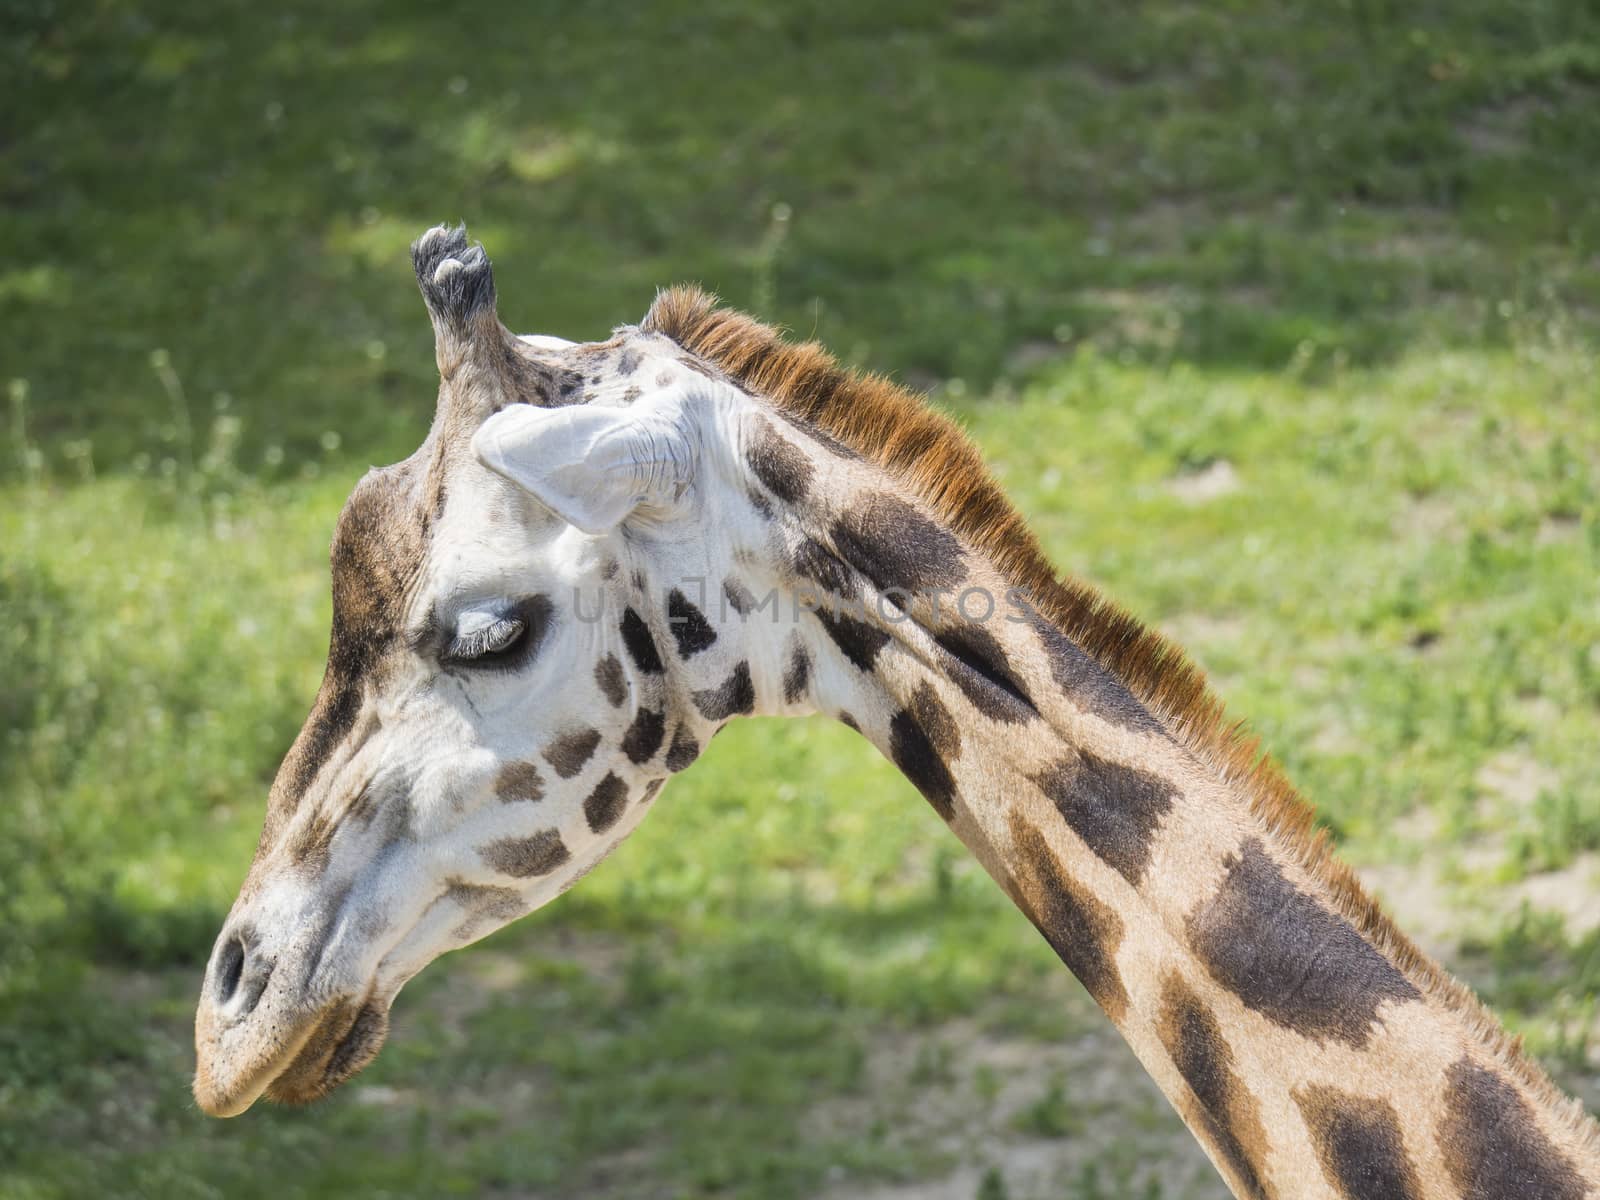 Close up portrait of giraffe head, Giraffa camelopardalis camelopardalis Linnaeus, profile view, green bokeh background.